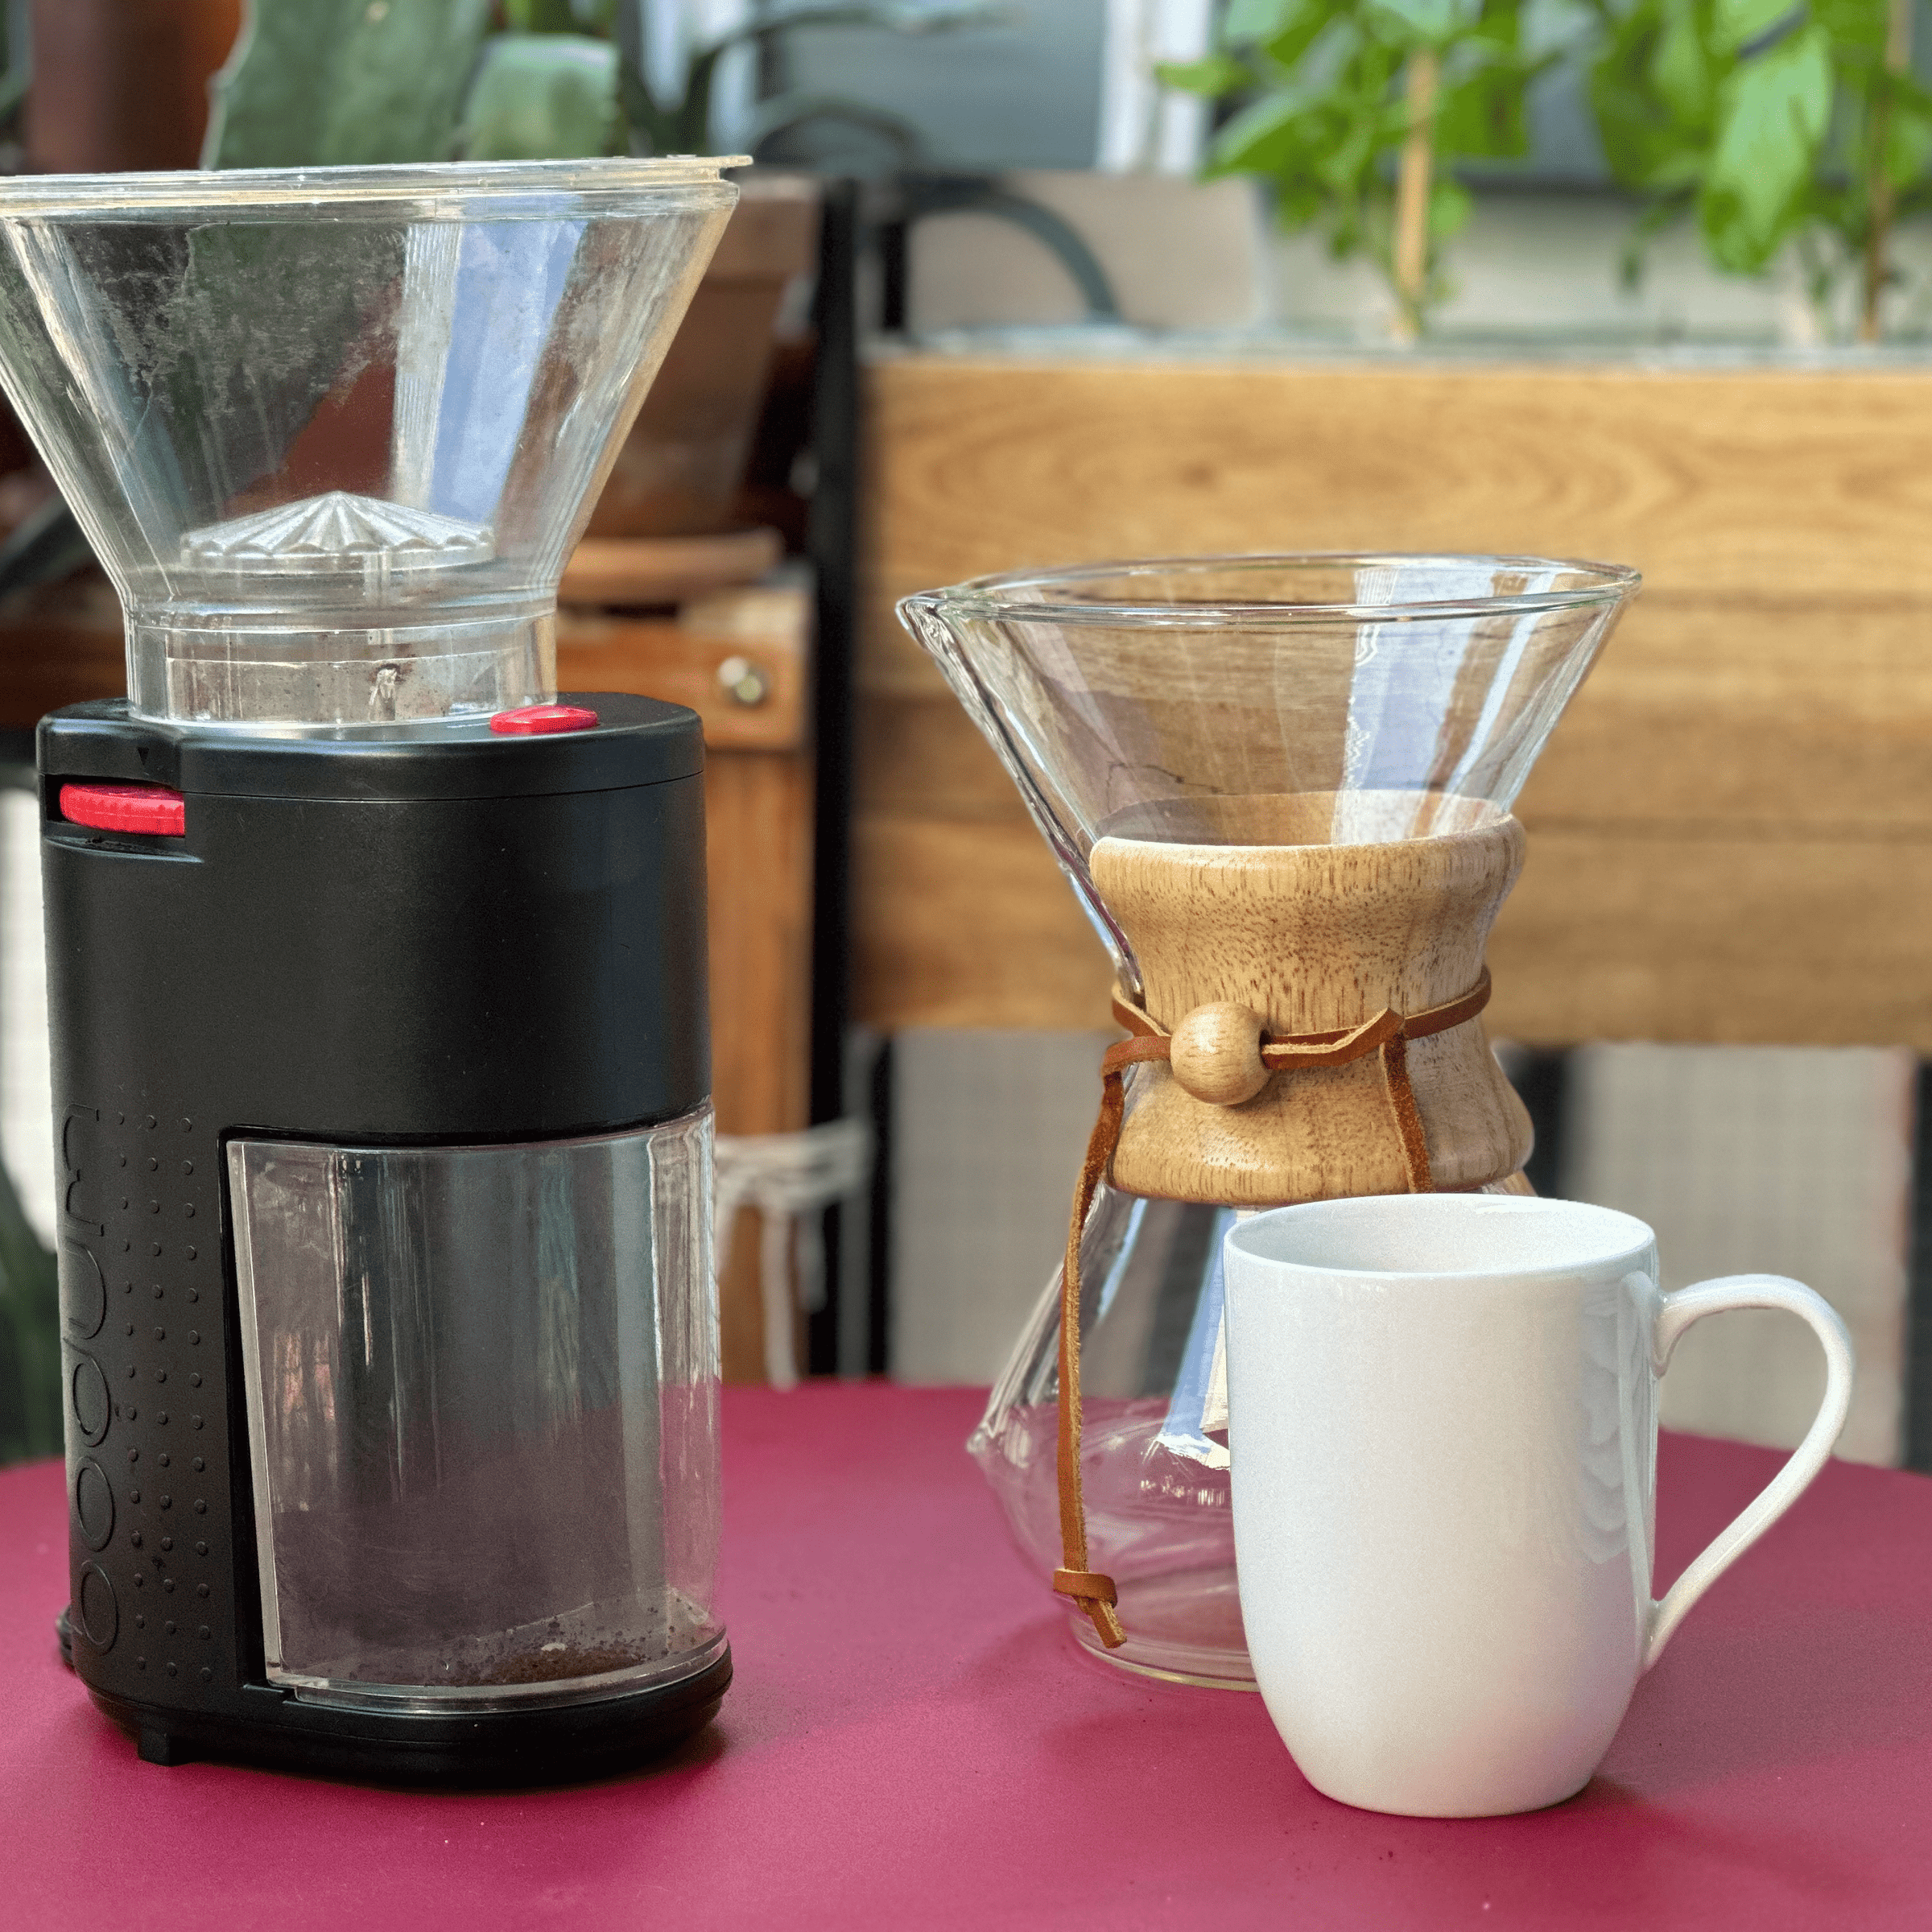 Bodum Bistro Grinder Review - First Coffee, Then…